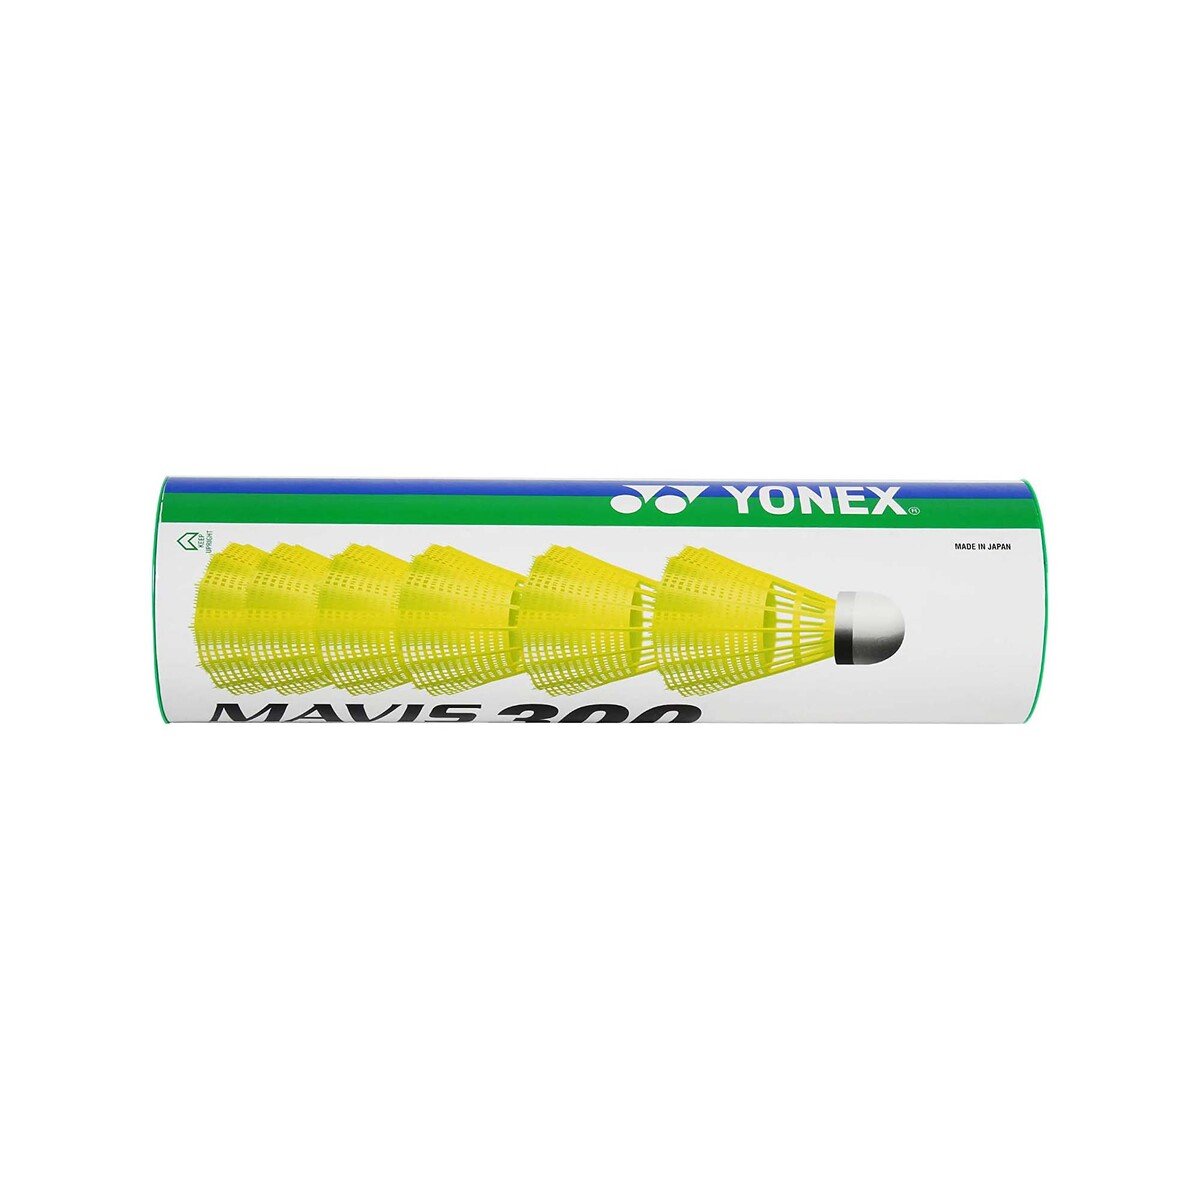 Yonex Shuttlecock 1x6 Green Cap Nylon Mavis 300 Yellow